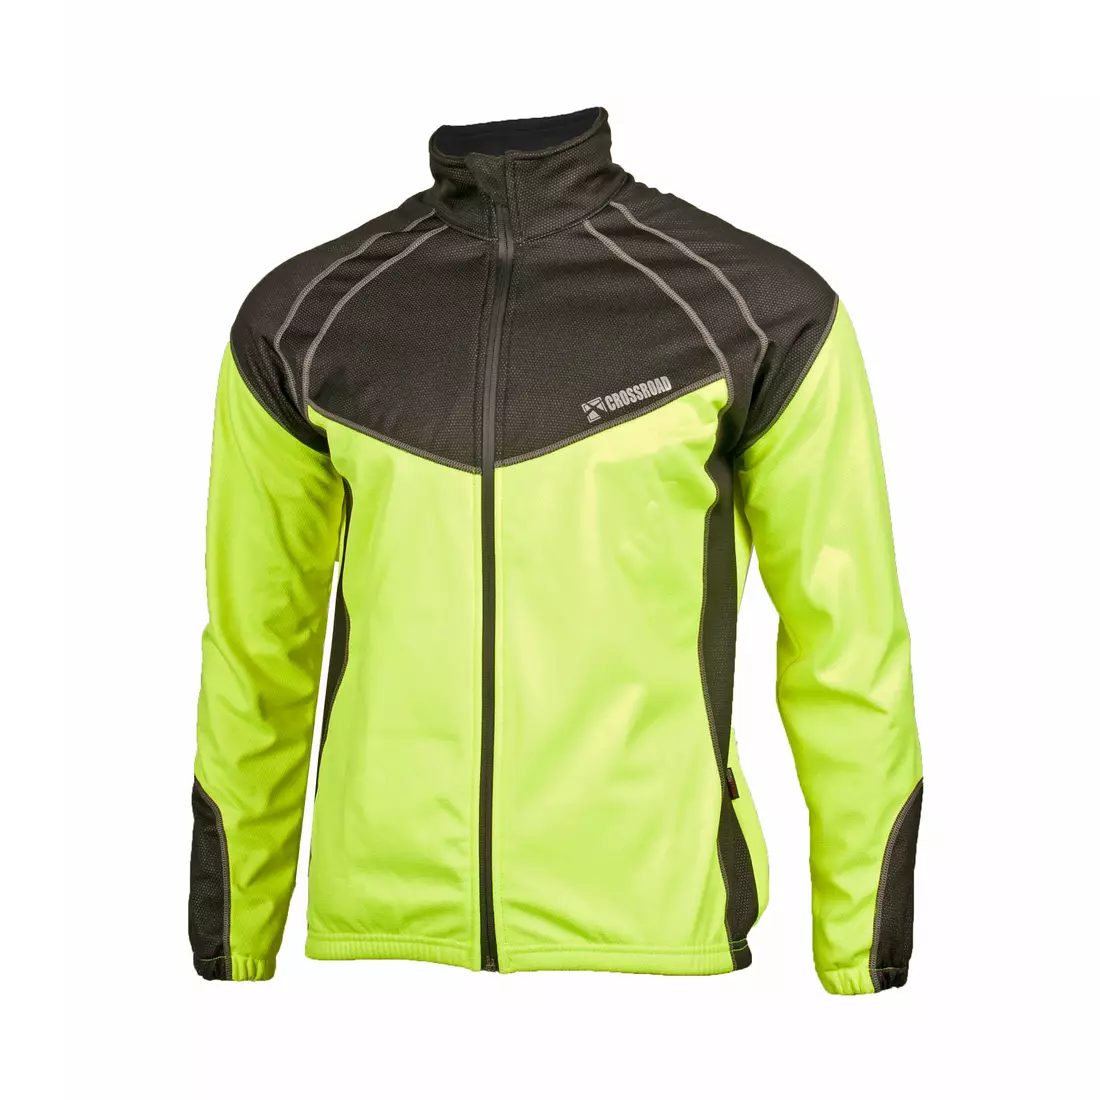 CROSSROAD FREEPORT winter cycling jacket, fluorine